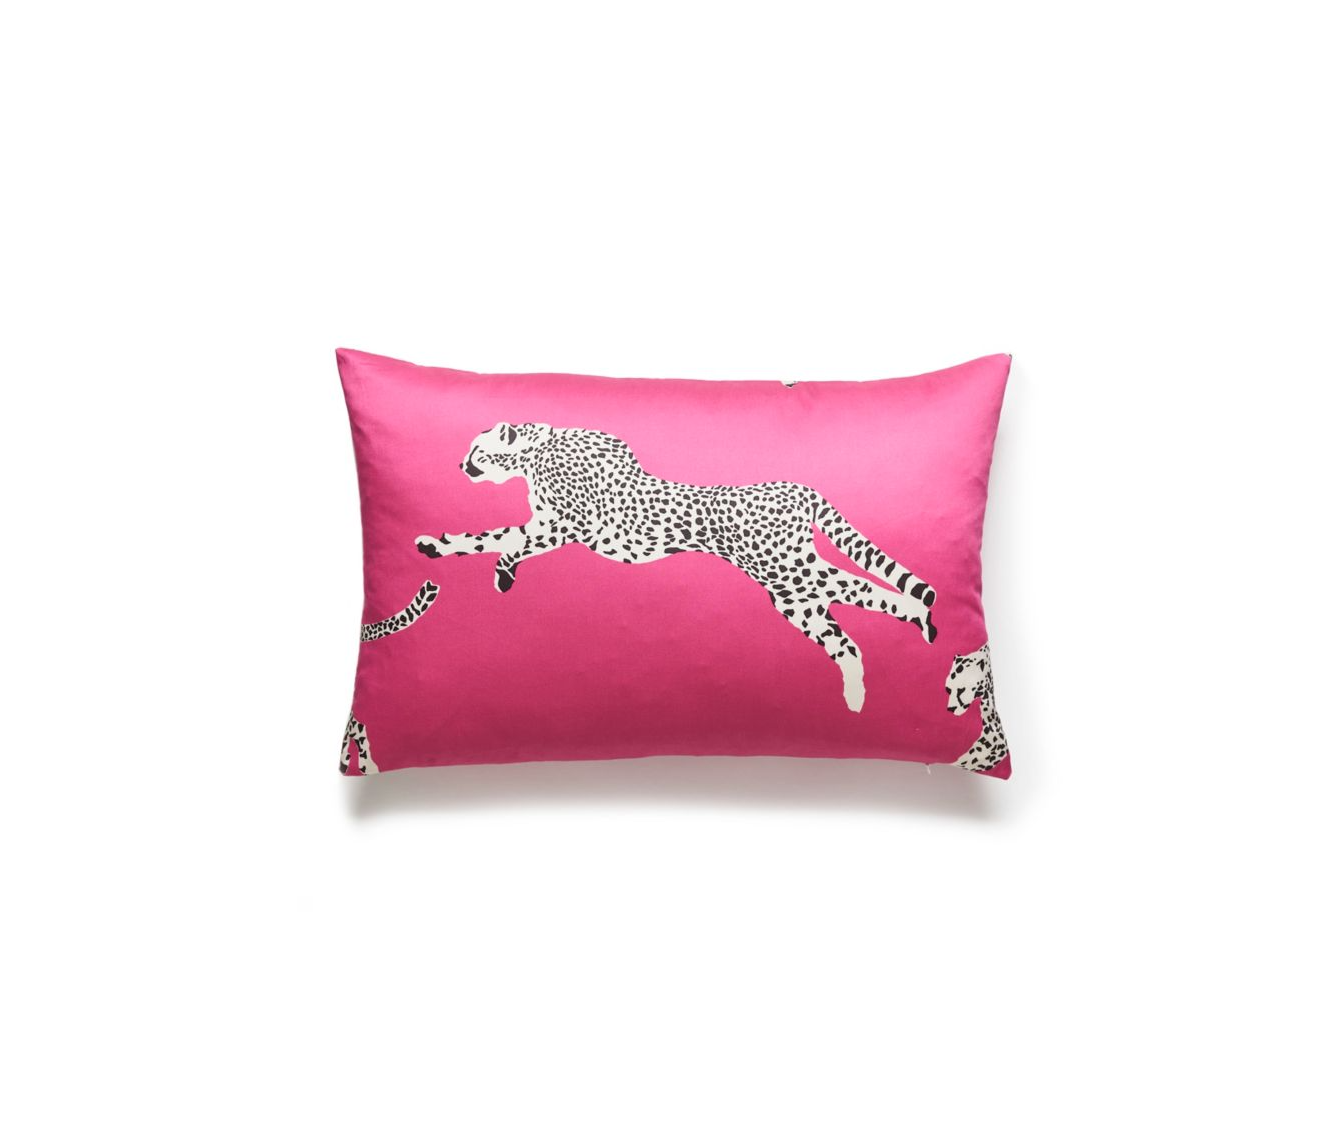 Leaping Cheetah Bubblegum Lumbar Pillow